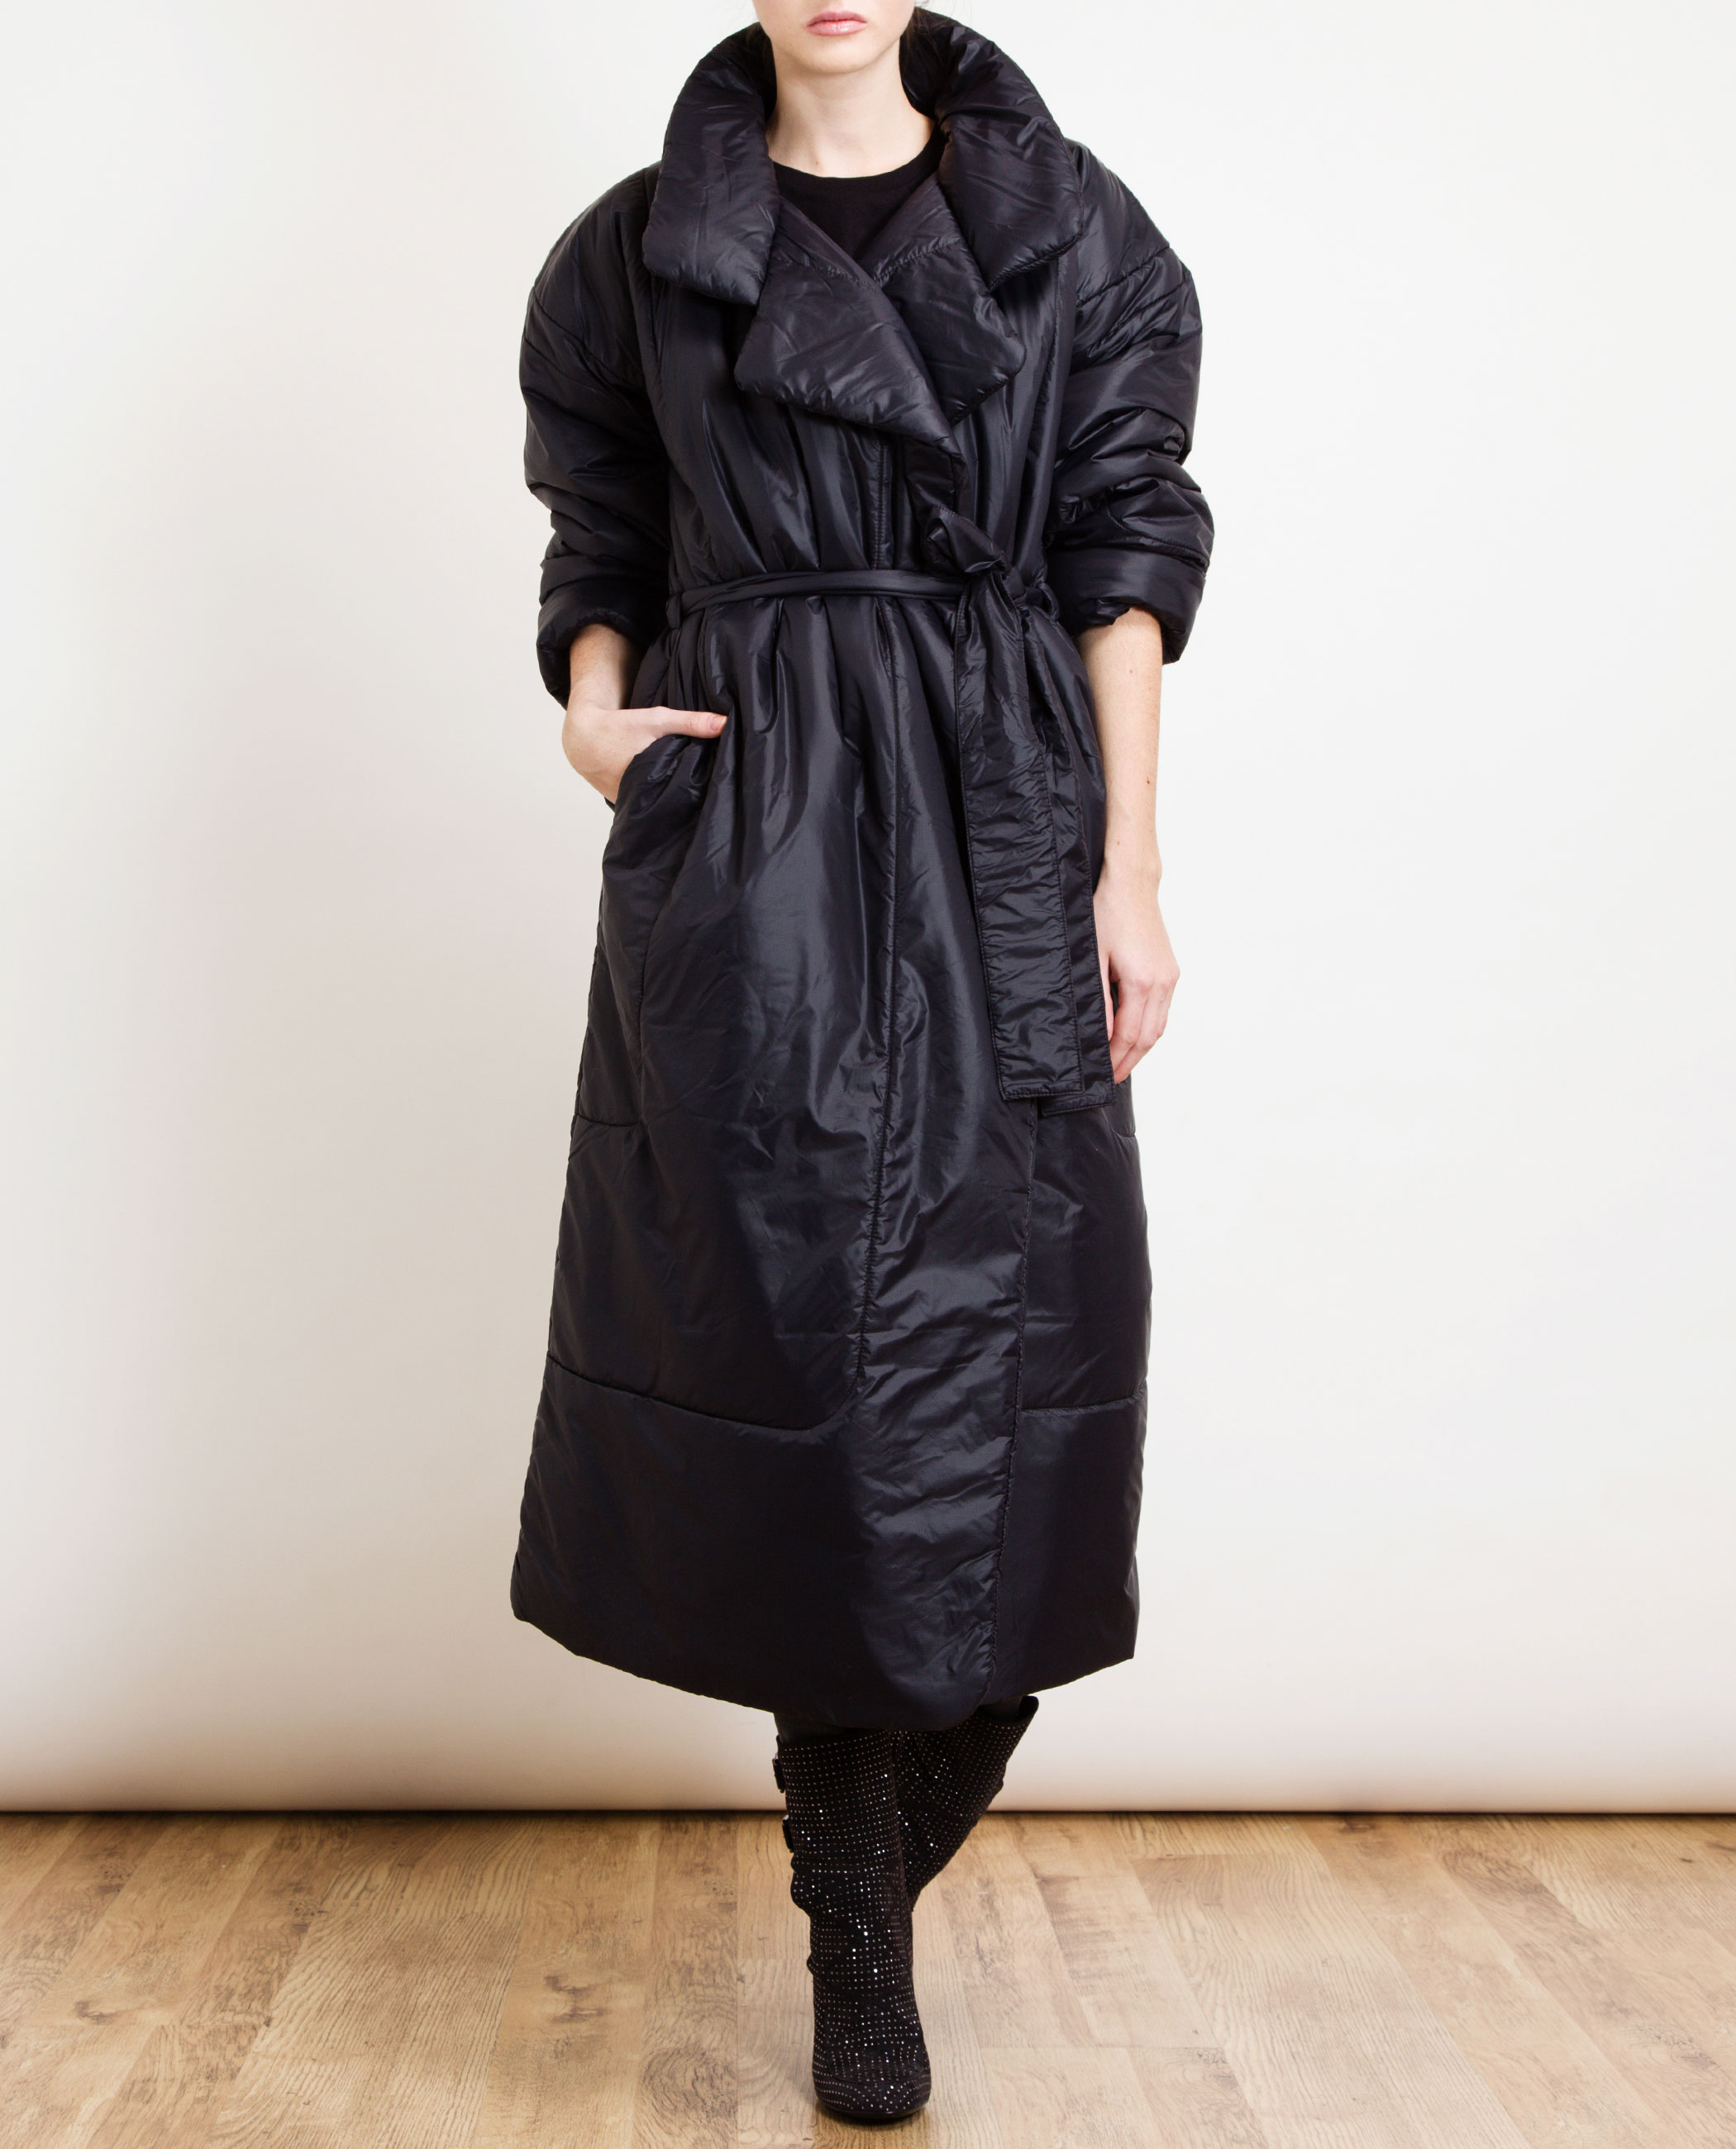 Lyst - Norma Kamali Reversible Sleeping Bag Long Coat in Black